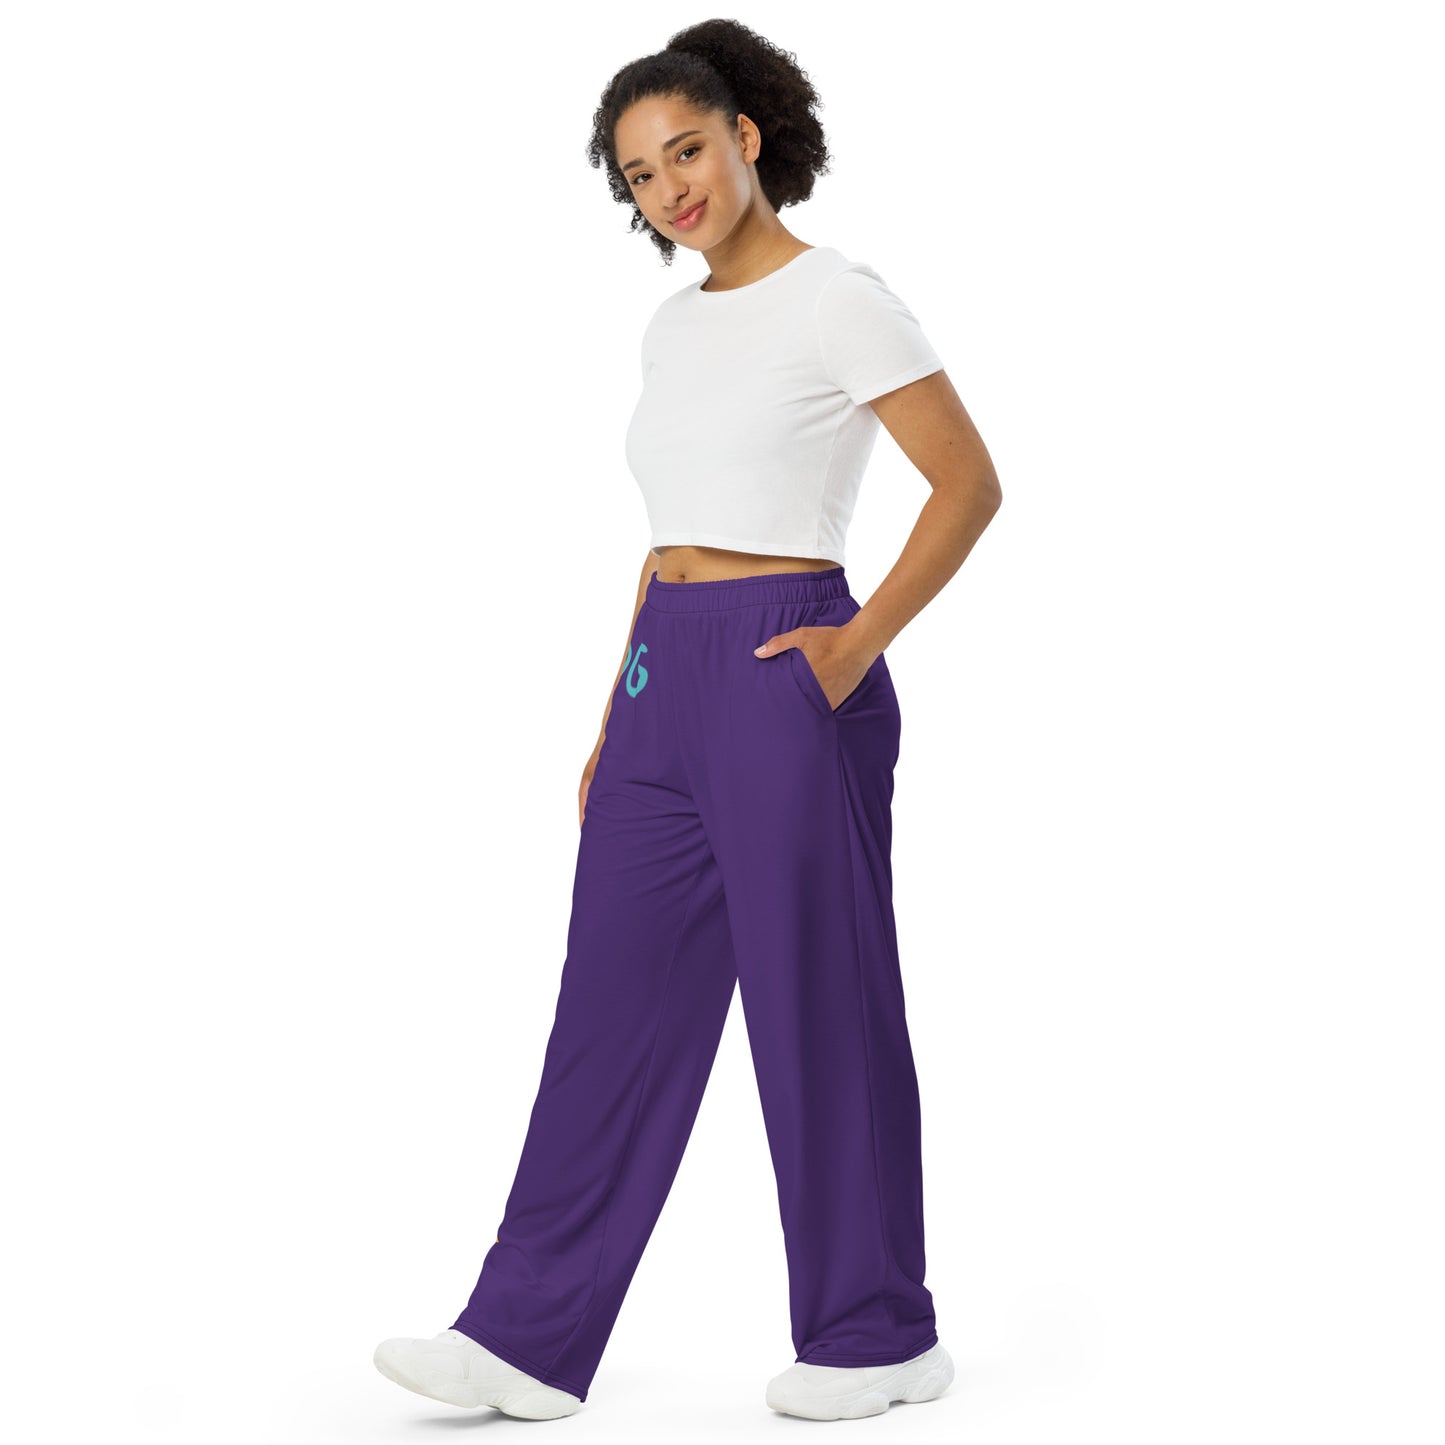 Purple Unisex Pants - OG Hippie Chick